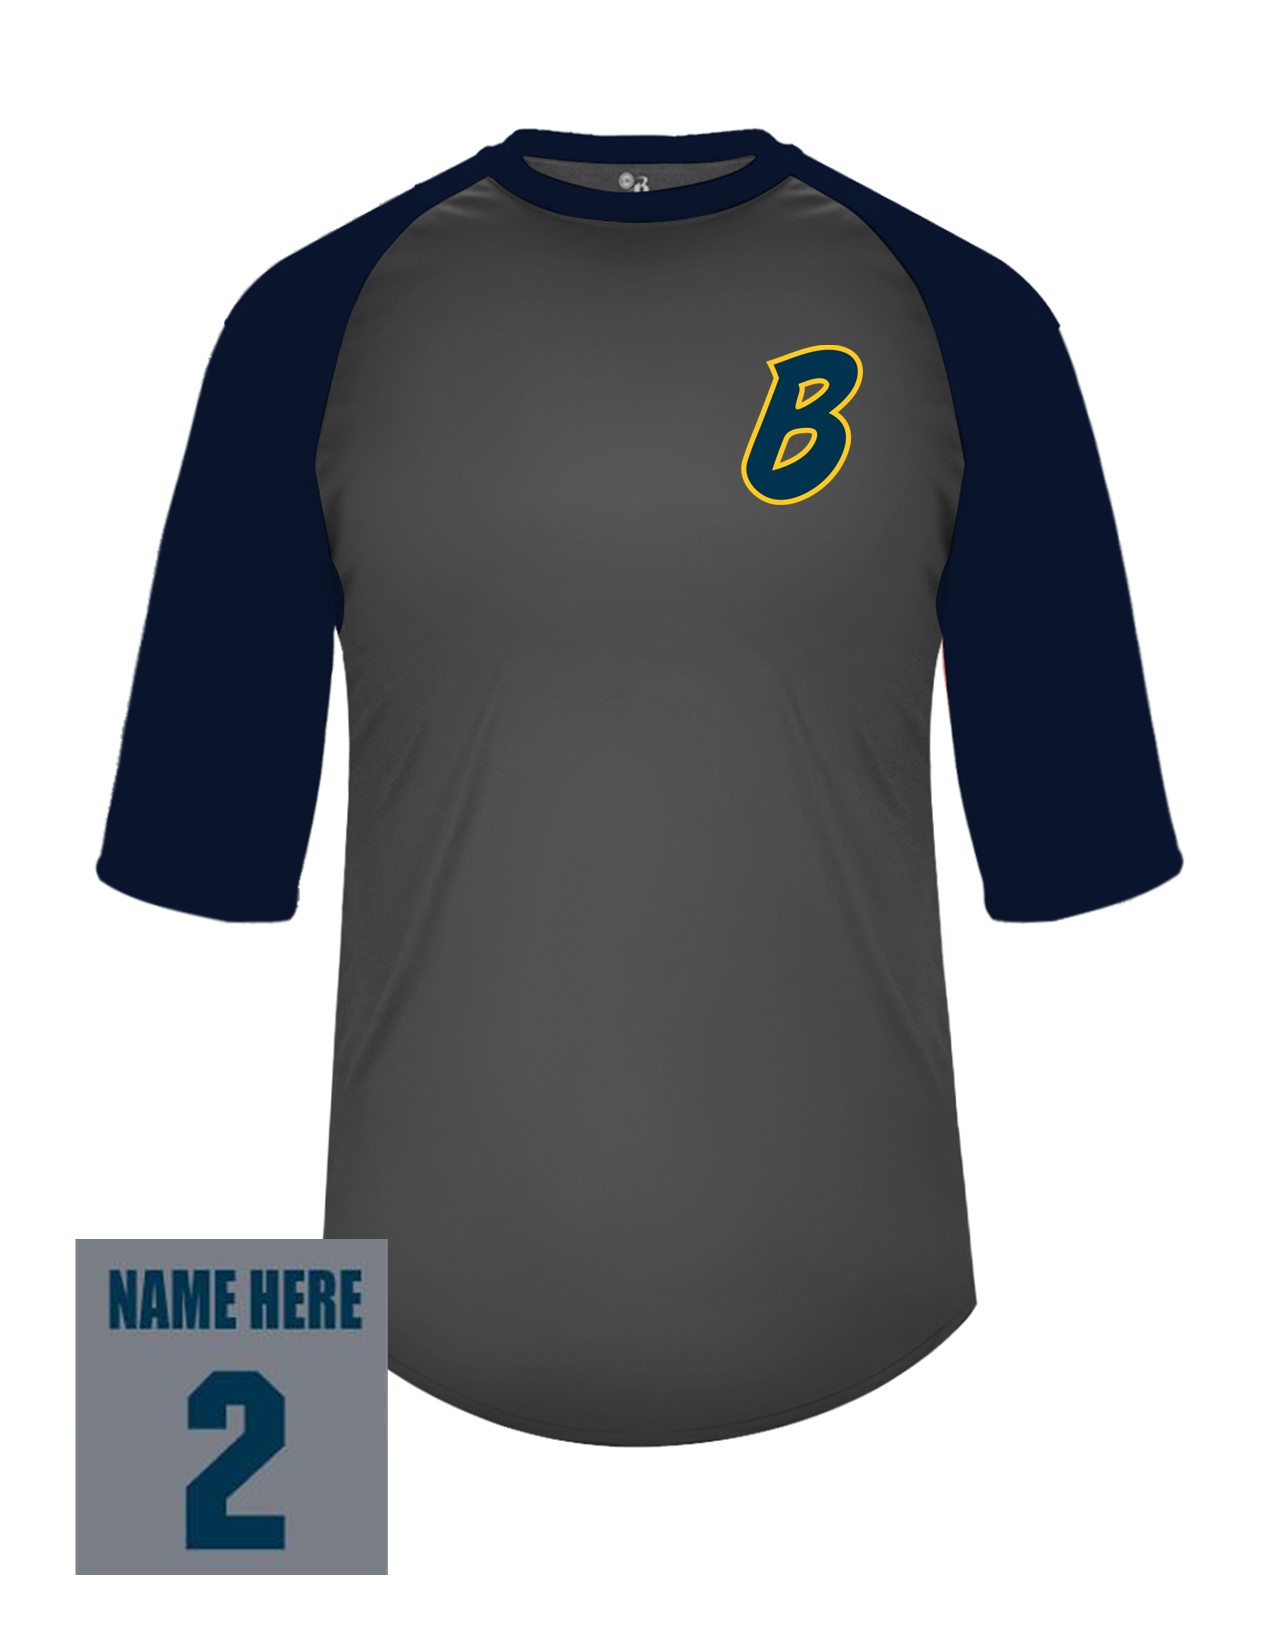 41b Badger 4133 Adult Baseball 3/4 Tee with Bombers "B" LC Logo